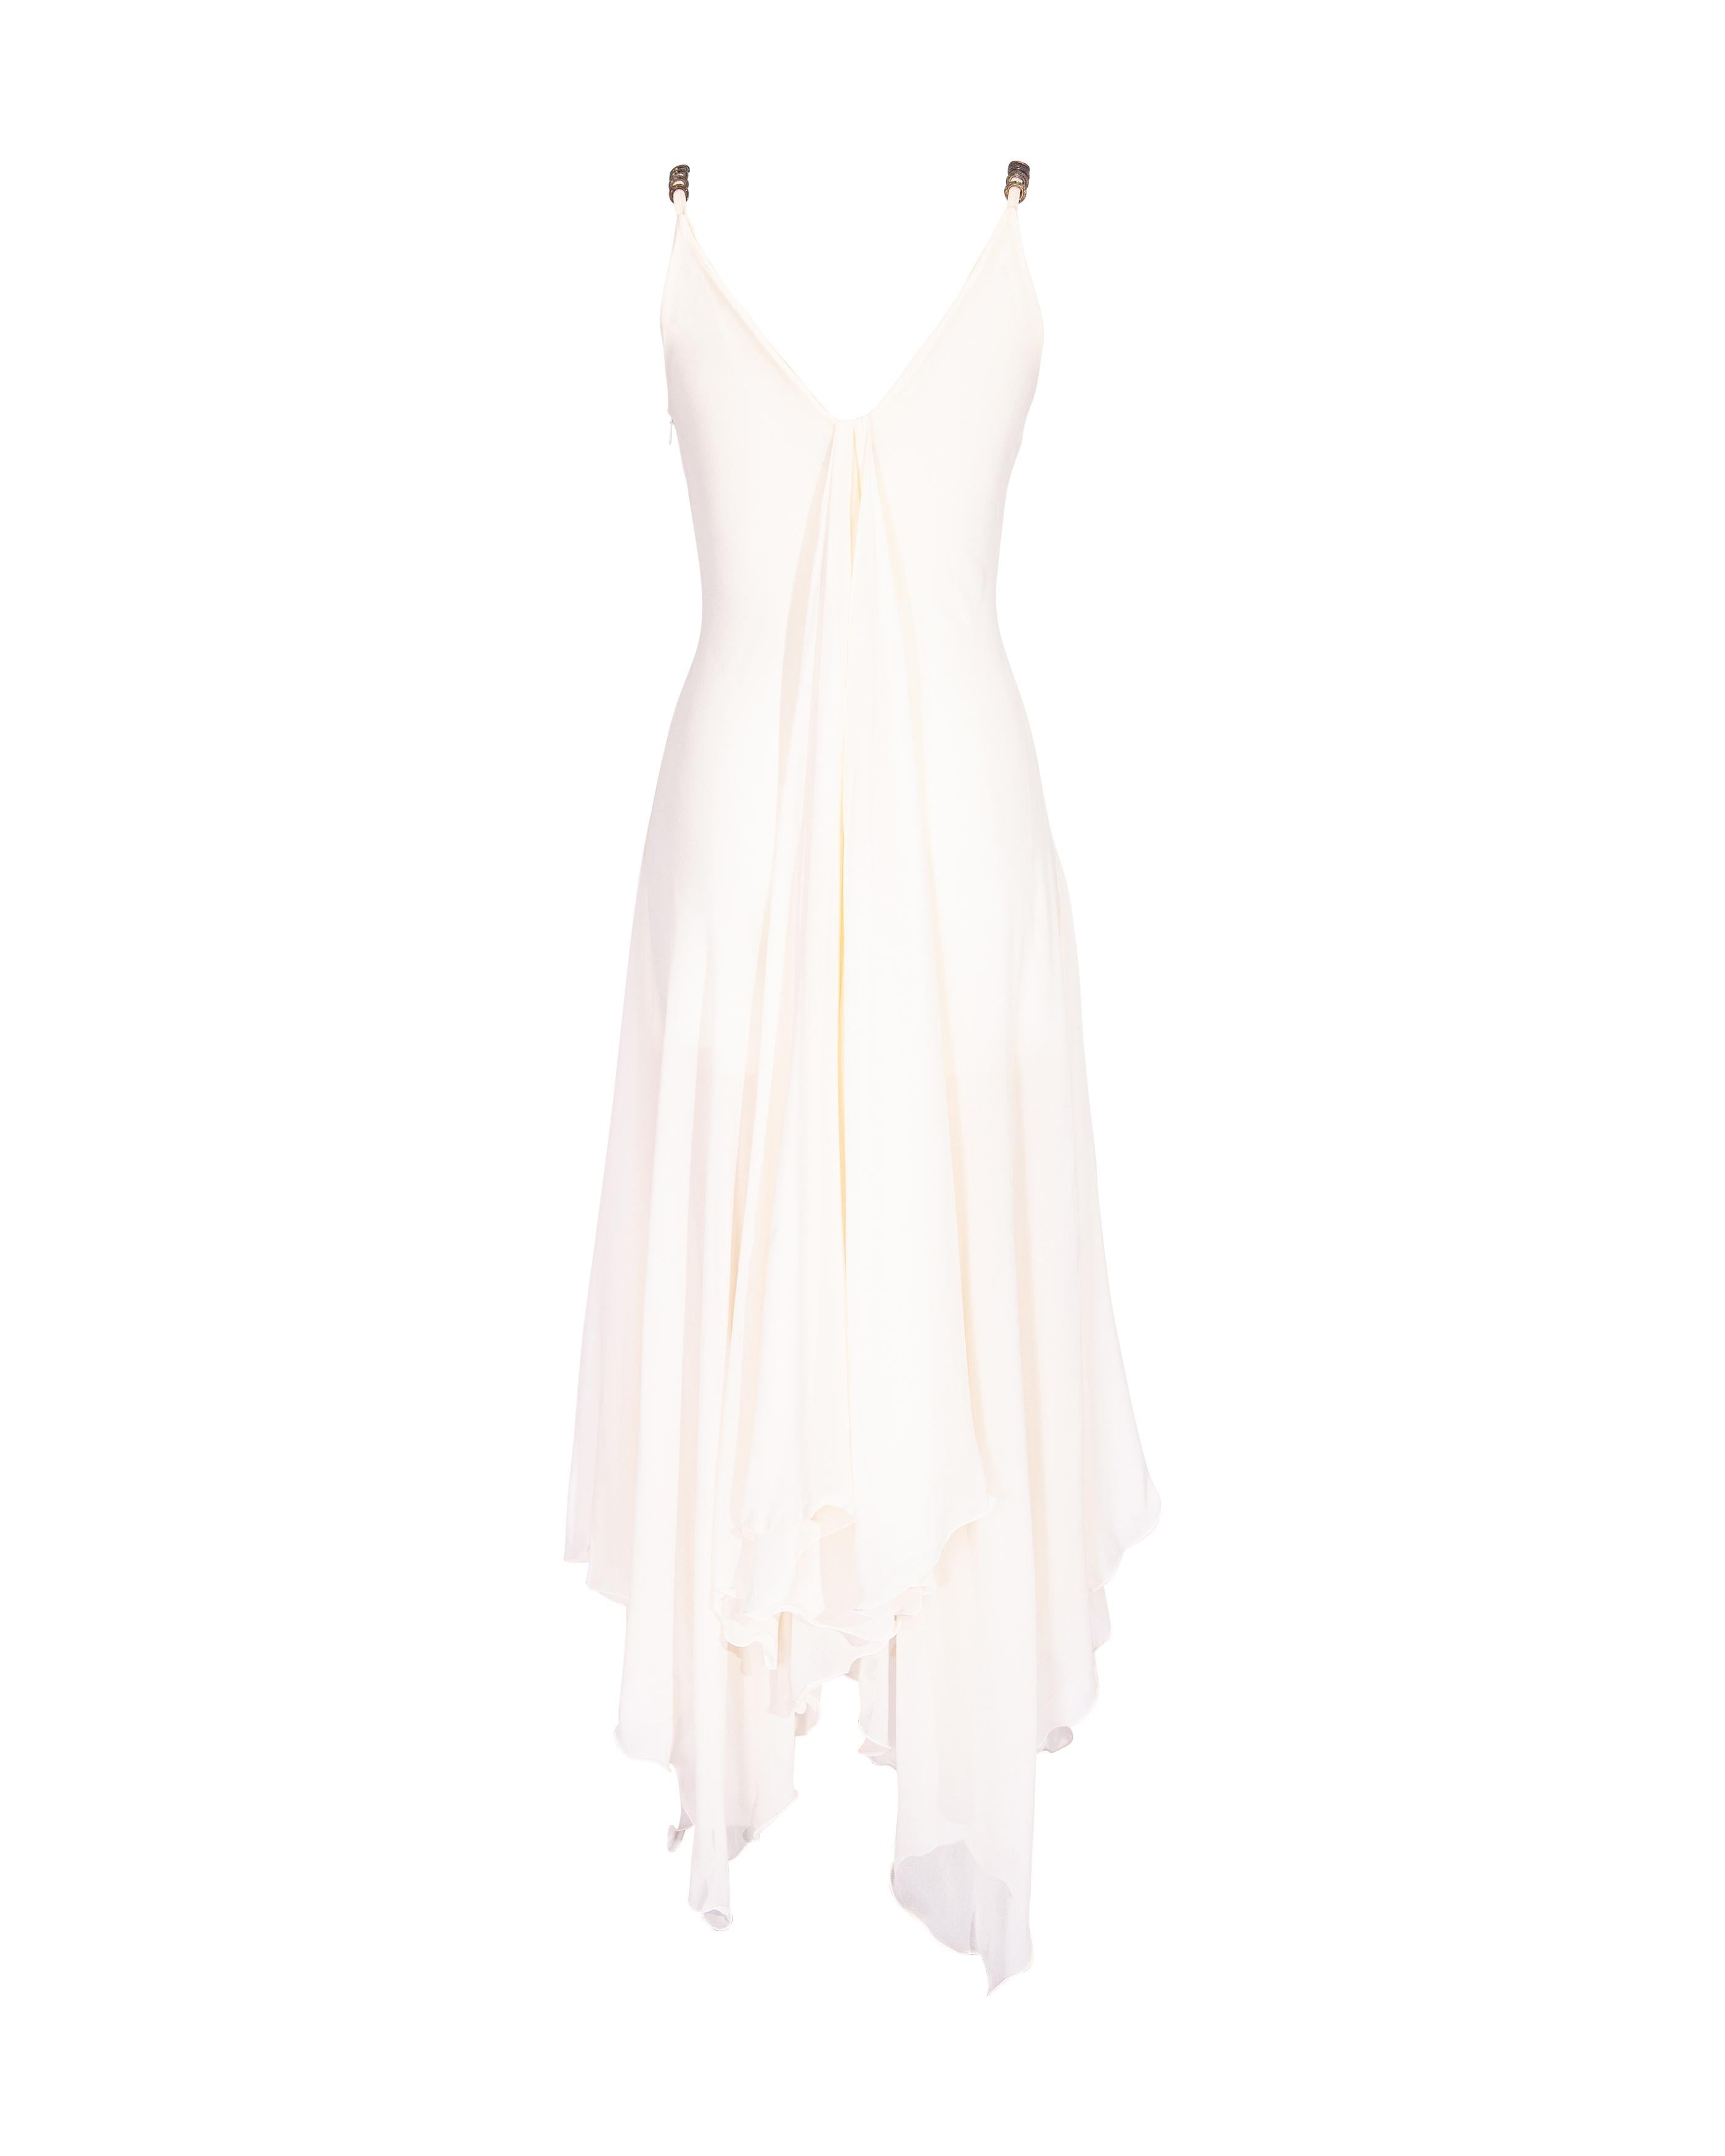 Women's S/S 1995 Gianni Versace Couture Silk Chiffon Drape Front Gown